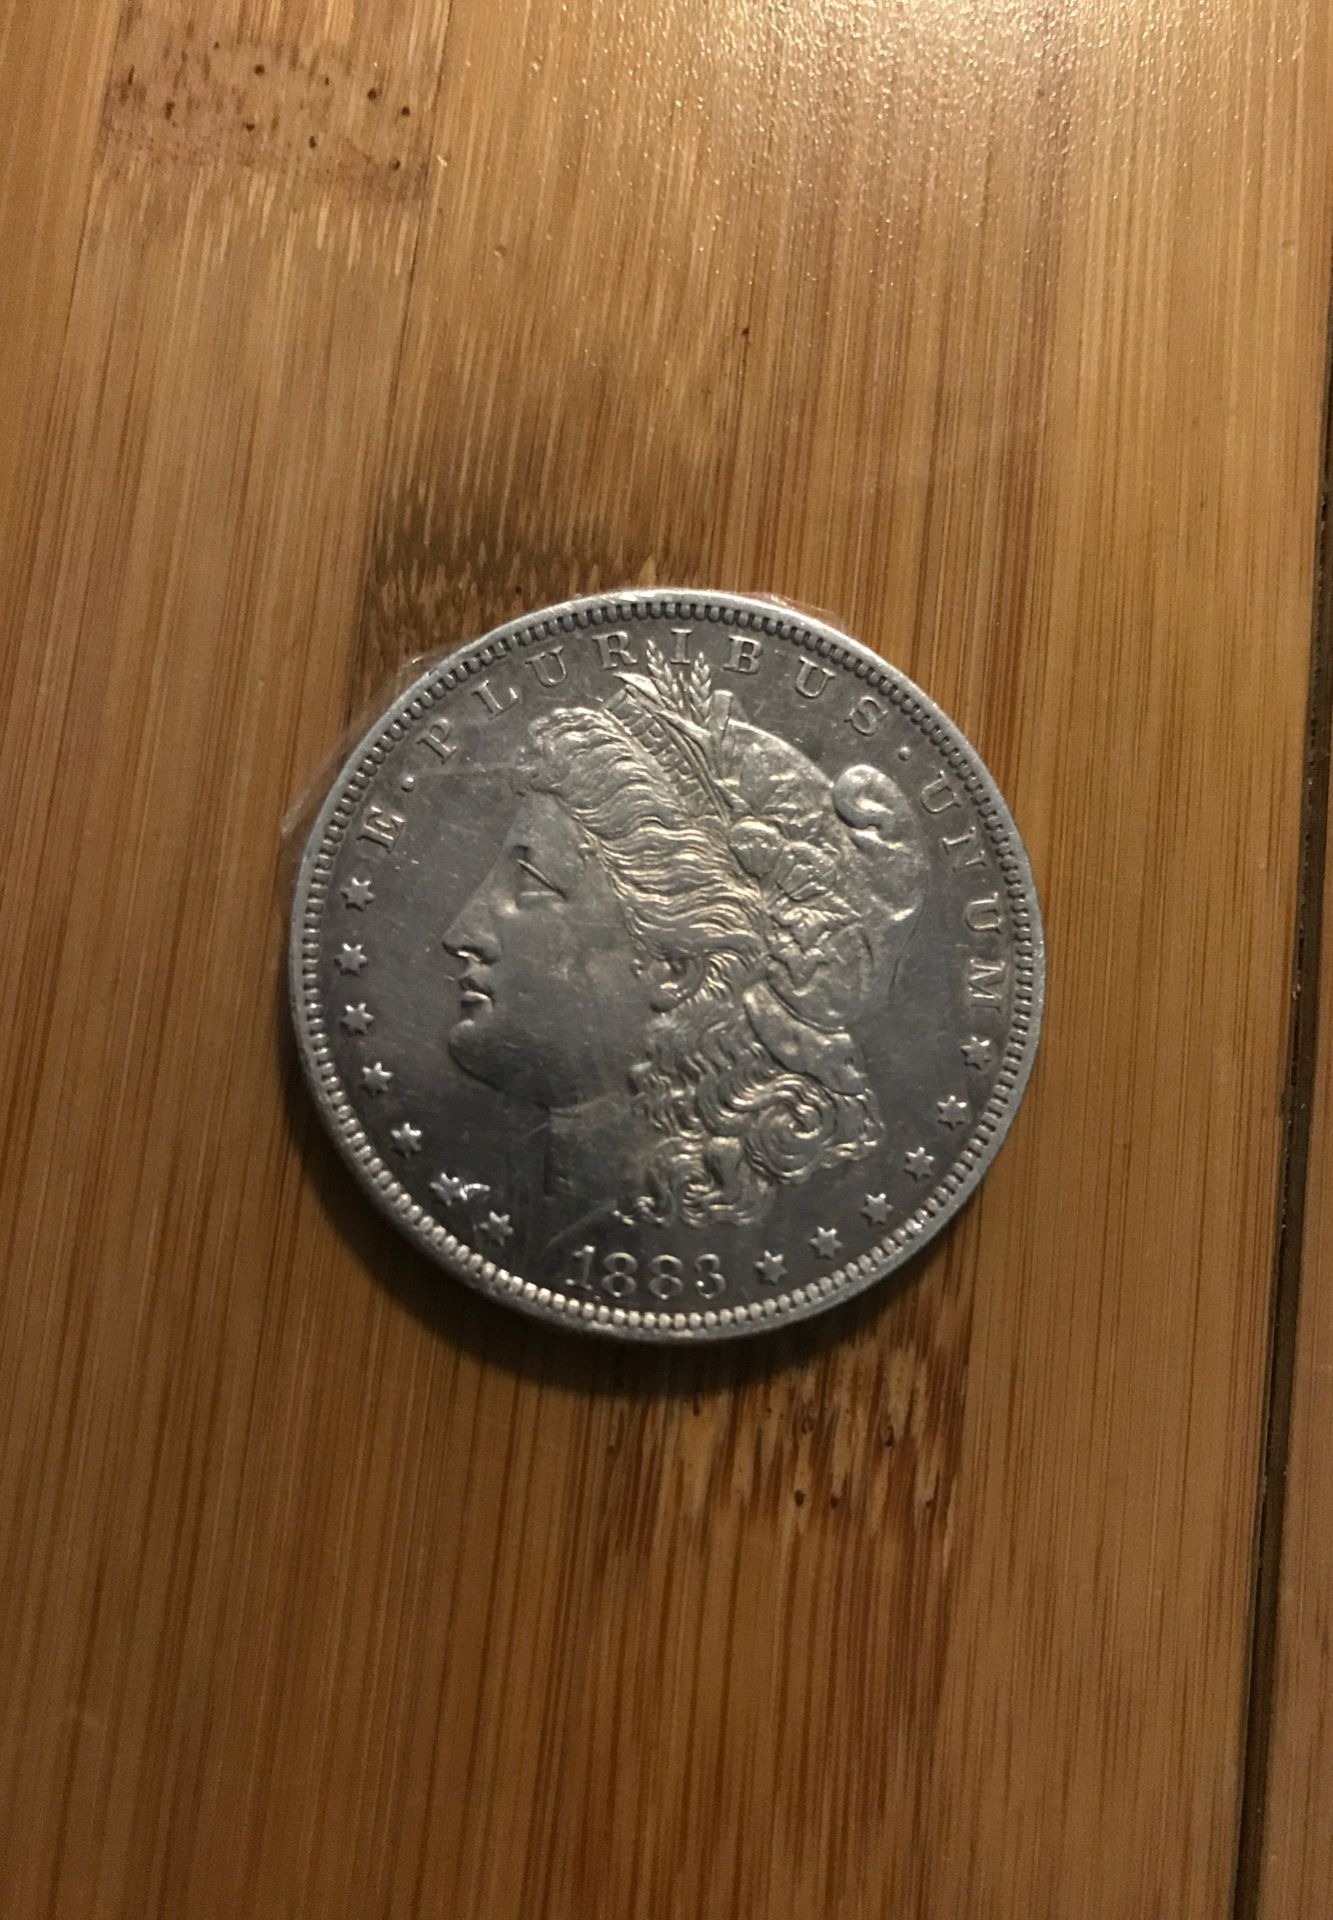 Morgan silver dollar 1883